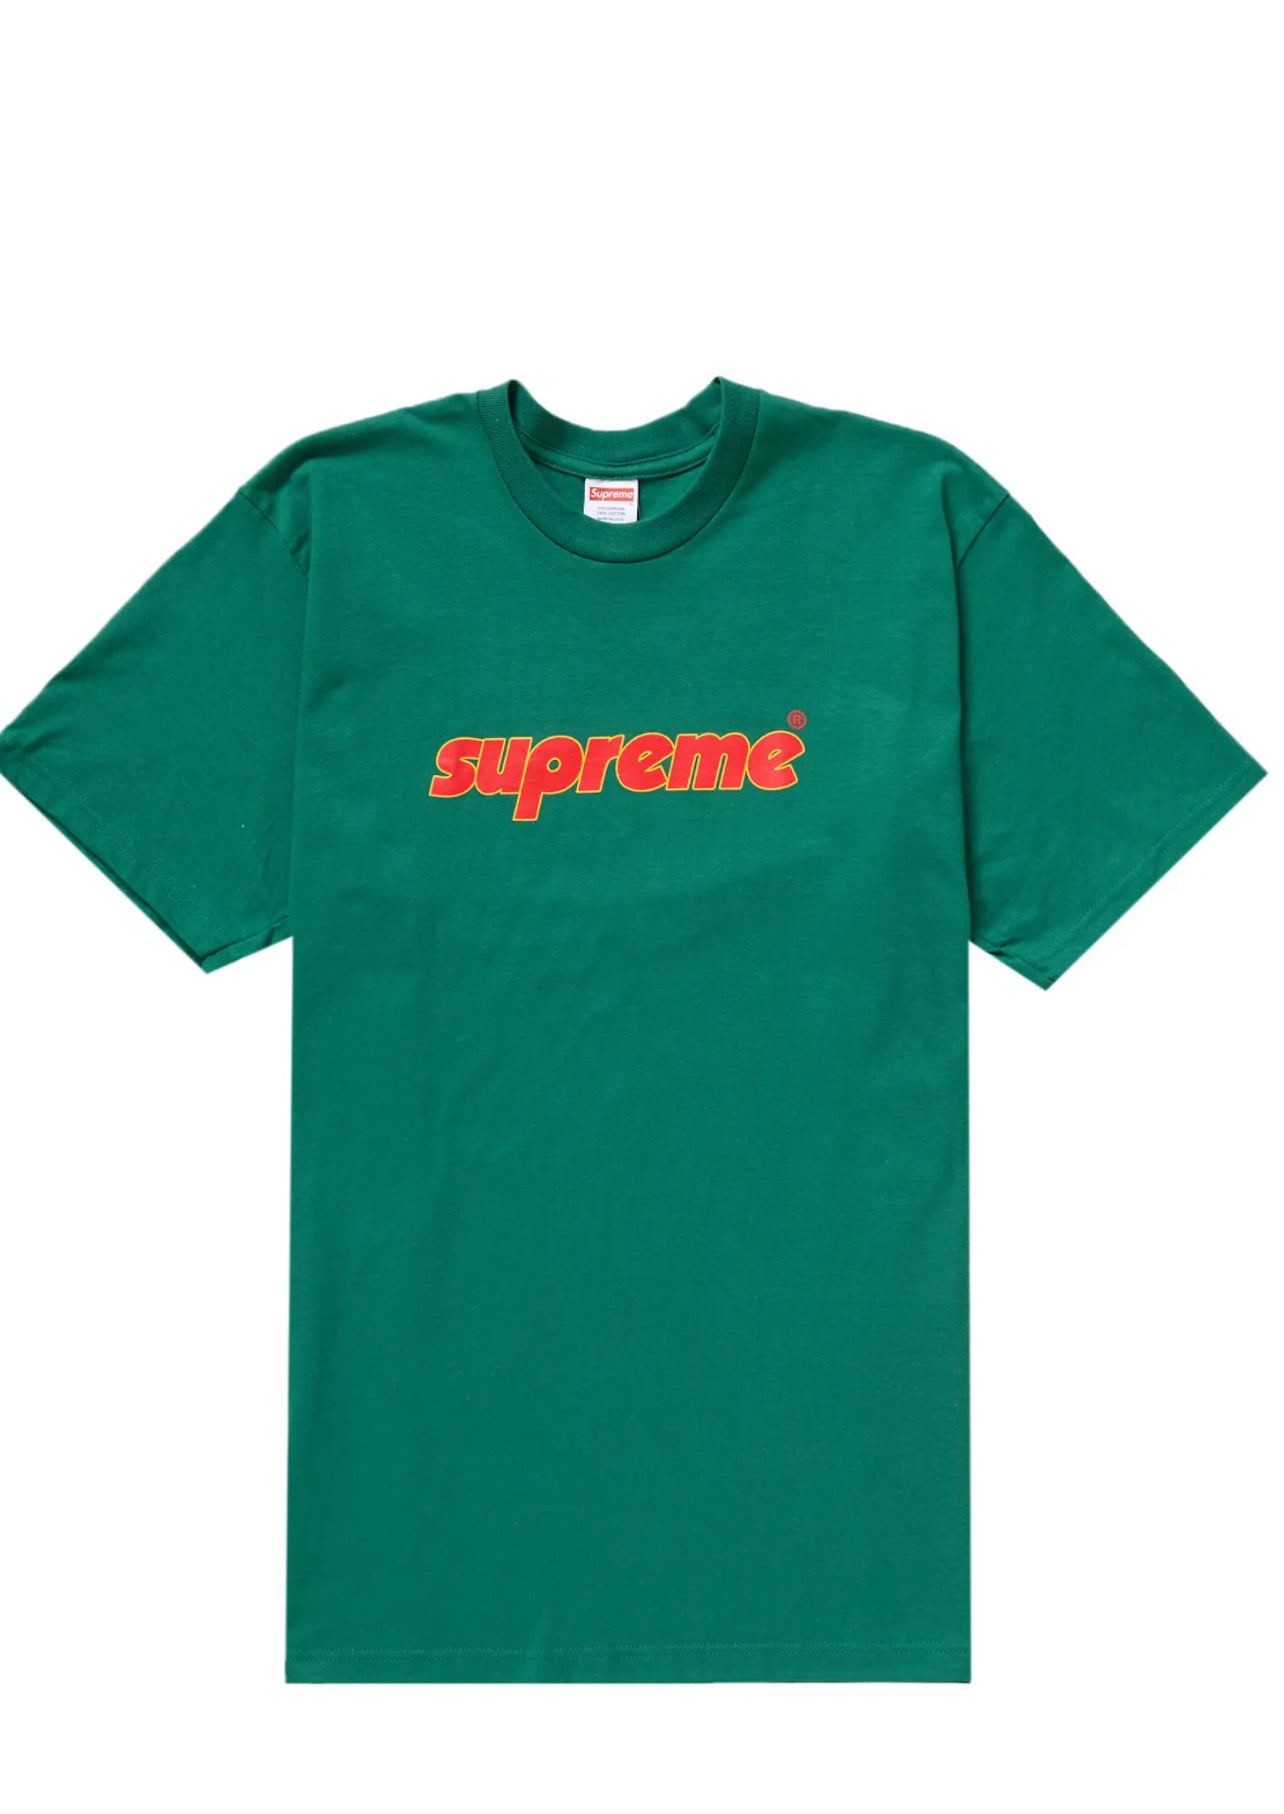 Camiseta Supreme Pinline Pino Claro